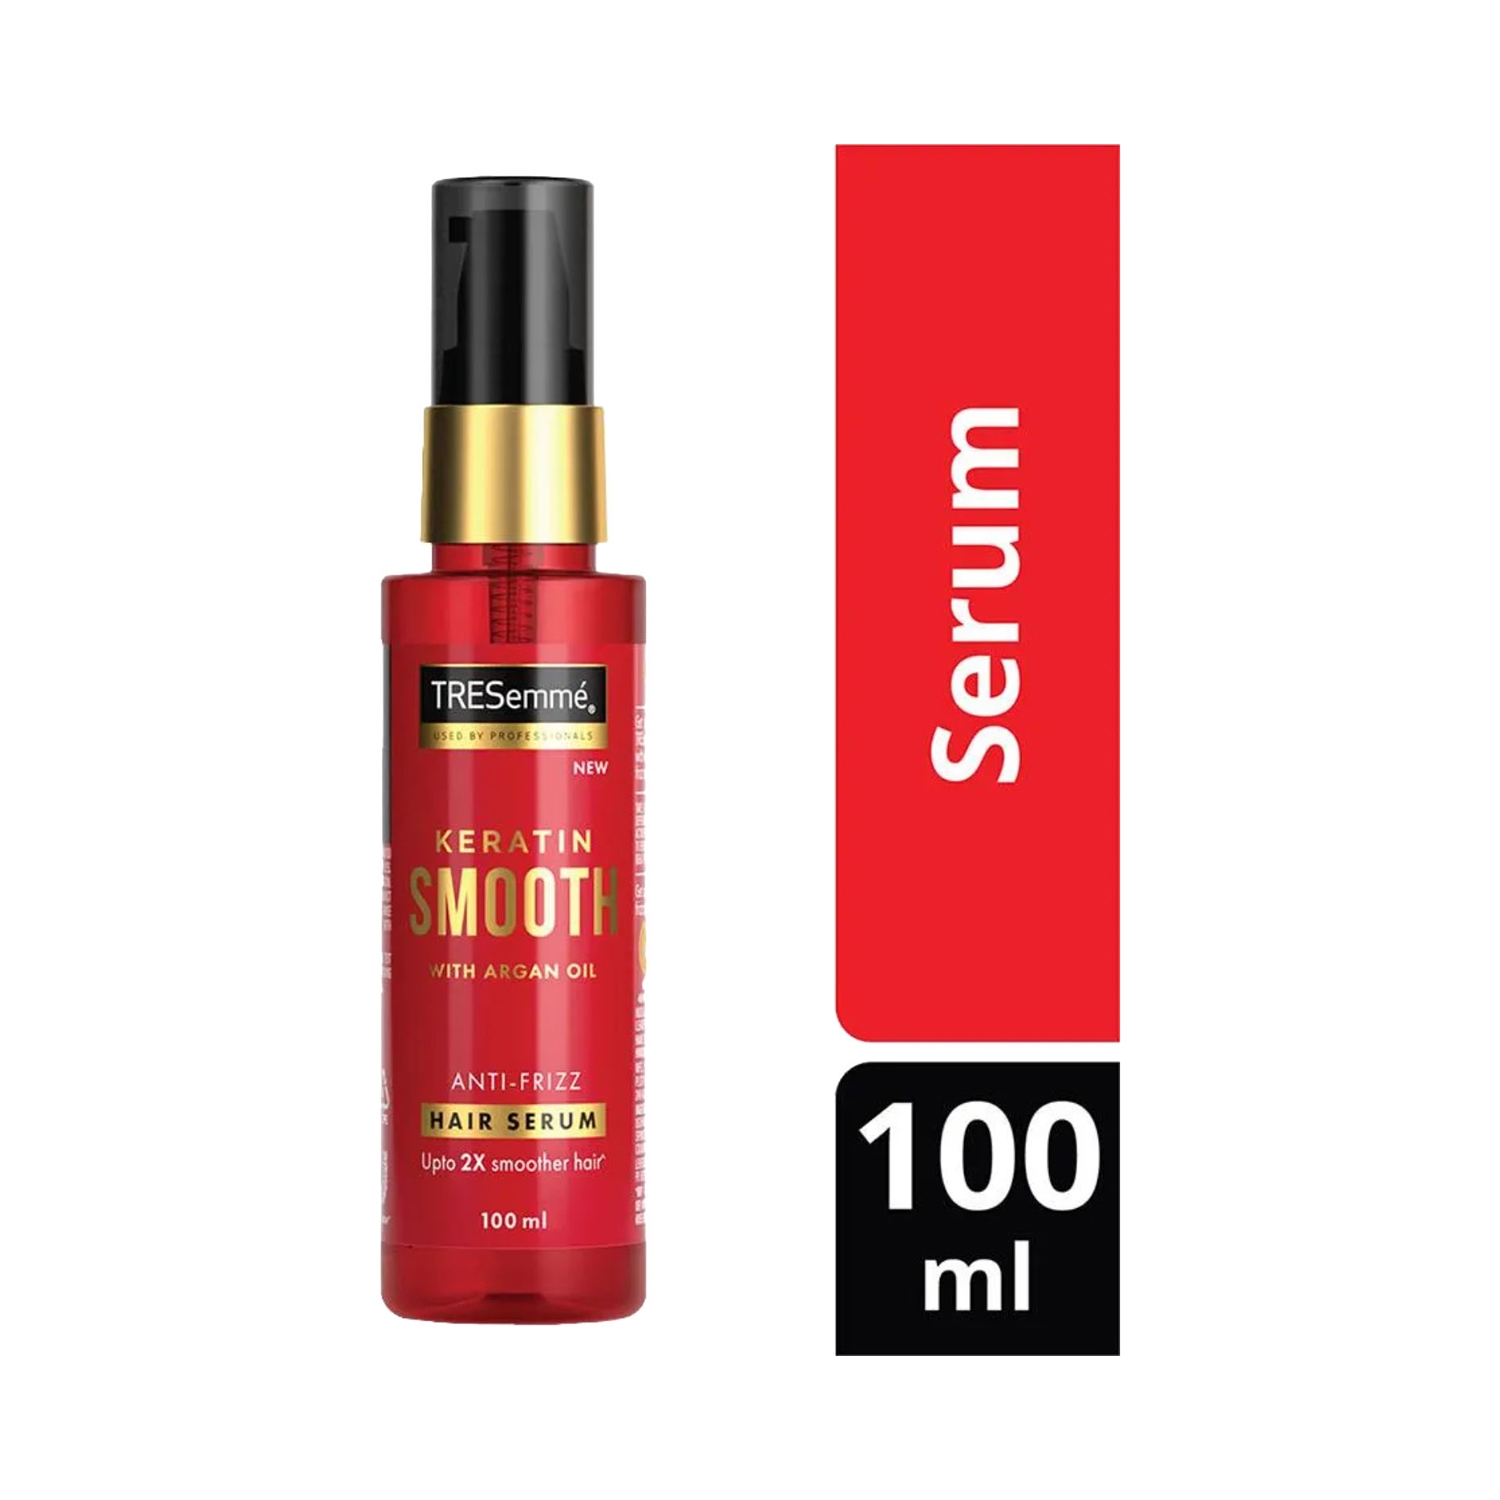 Tresemme | Tresemme Keratin Smooth Anti-Frizz Hair Serum (100ml)